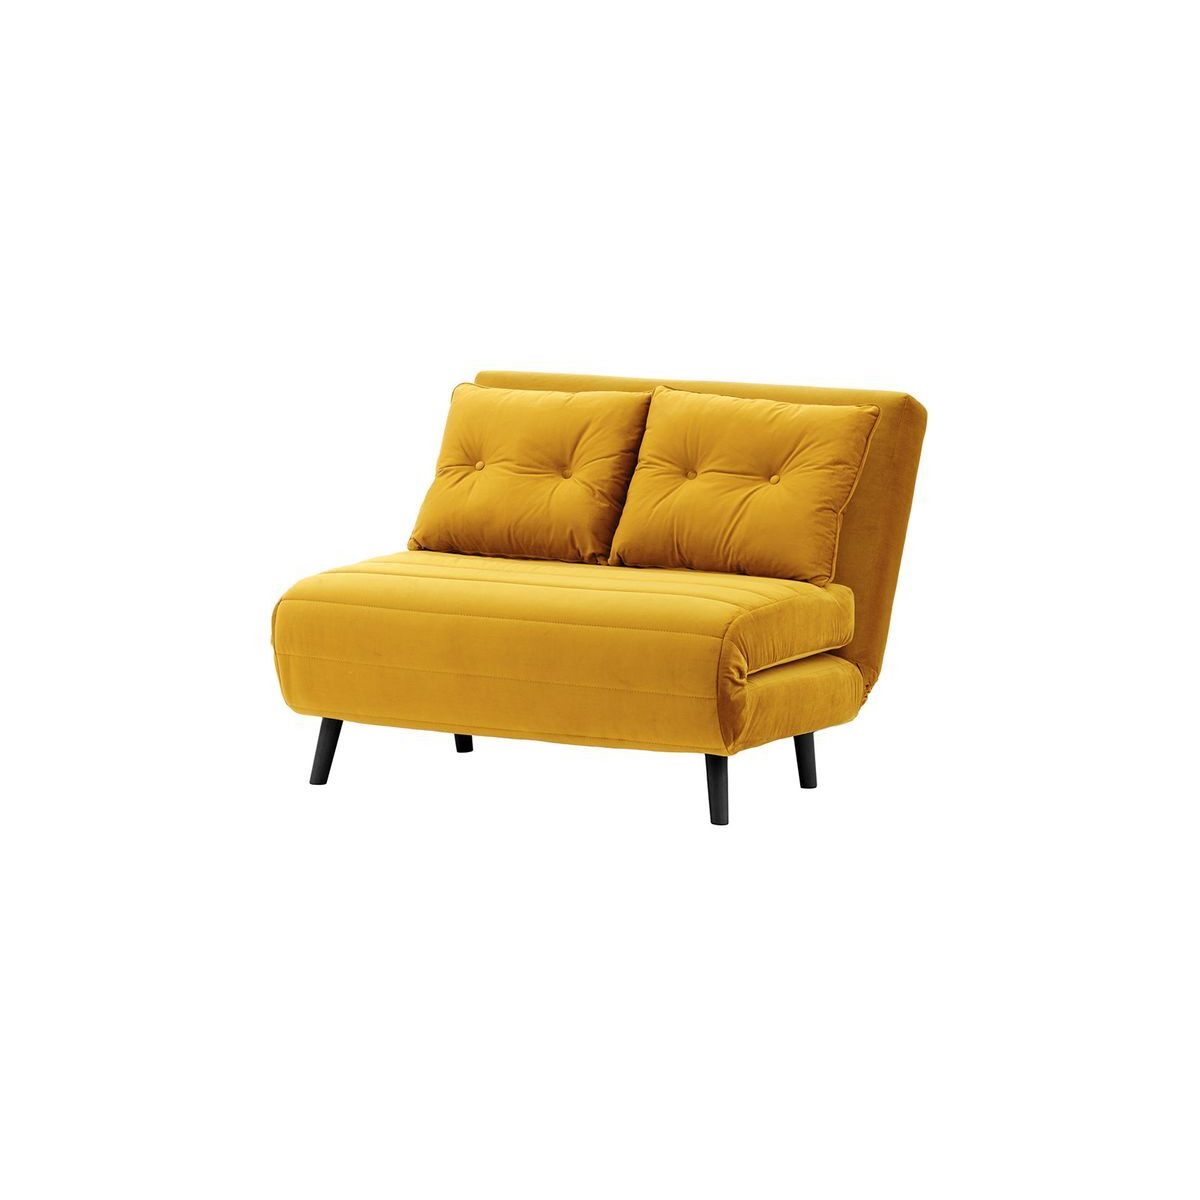 Flic Small Sofa Bed - width 103 cm, lime, Leg colour: black - image 1